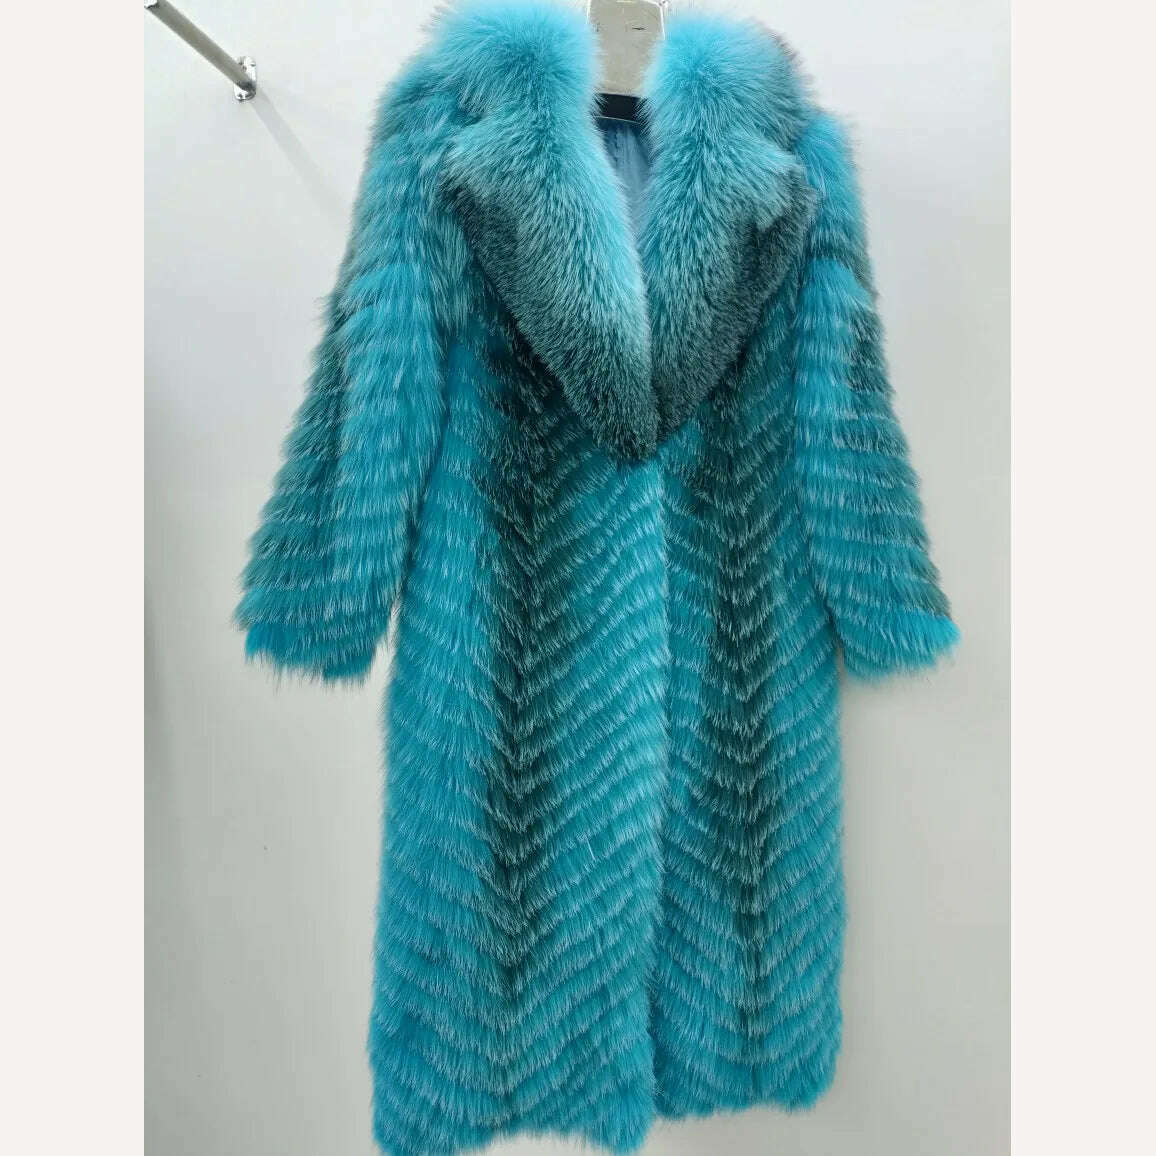 KIMLUD, Winter Long High Quality Real Cross Fox Fur Coat Women X-Length With Big Hood Pink Fashion Thicken Warm Fur Jacket Female, 1 / M bust 95cm, KIMLUD Womens Clothes